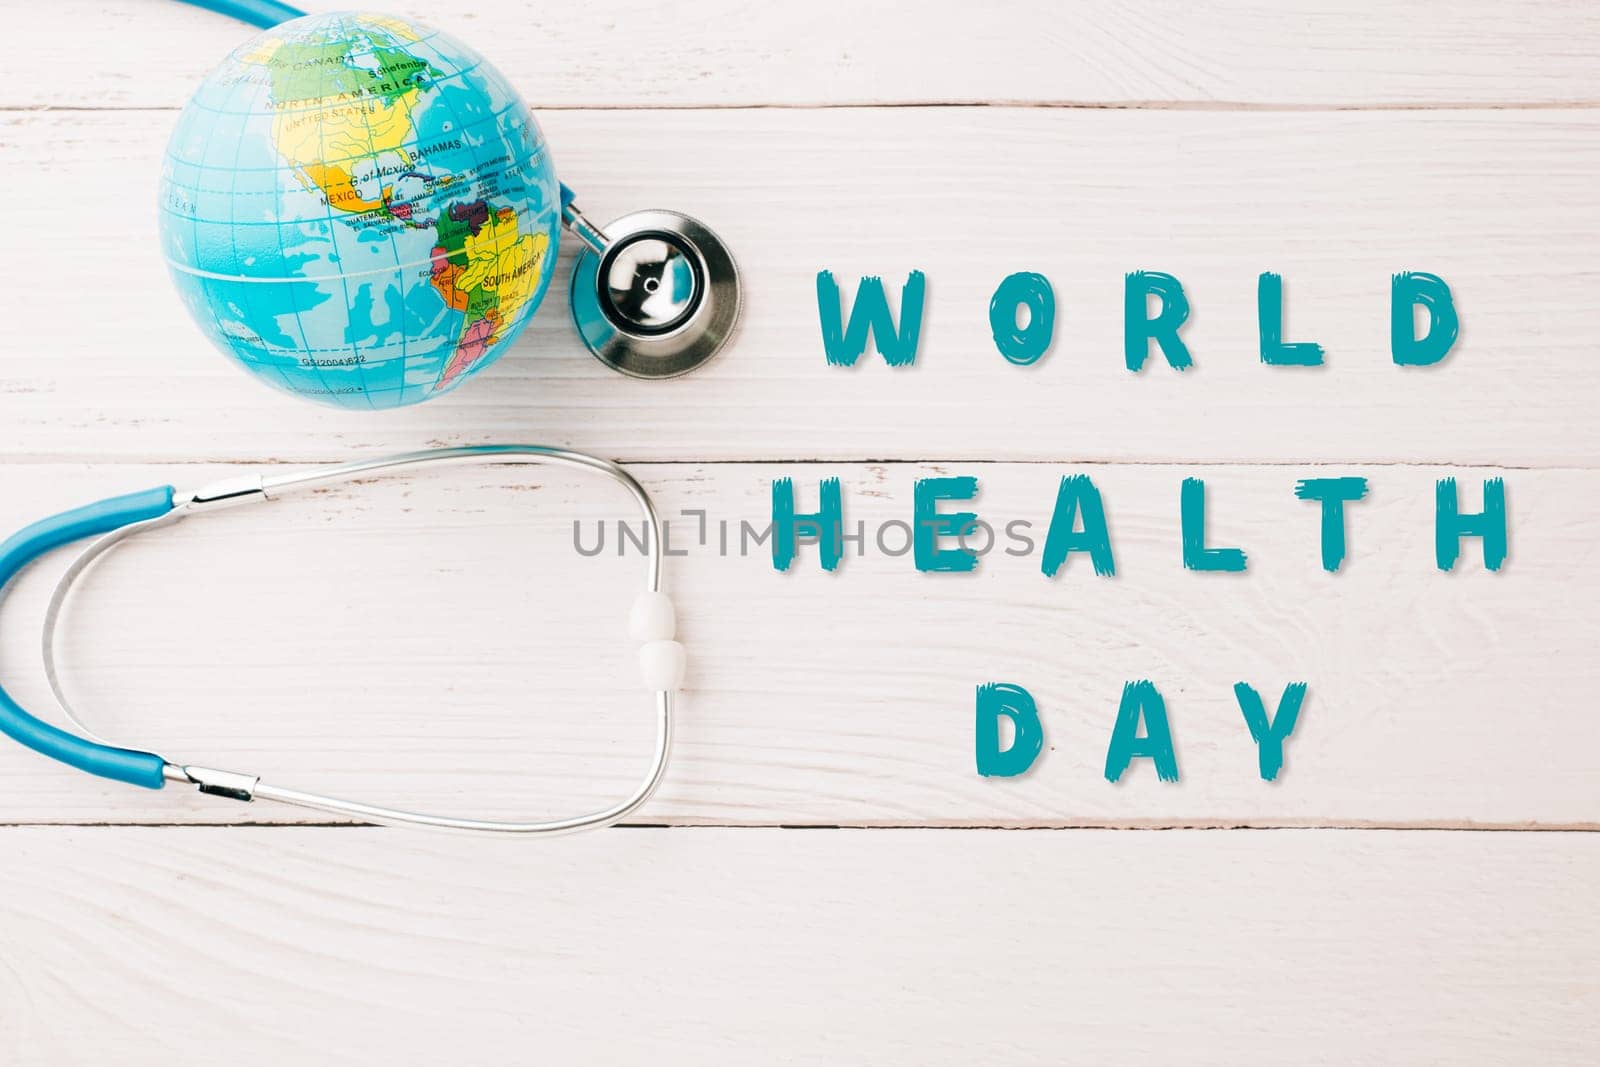 World Health Day by Sorapop